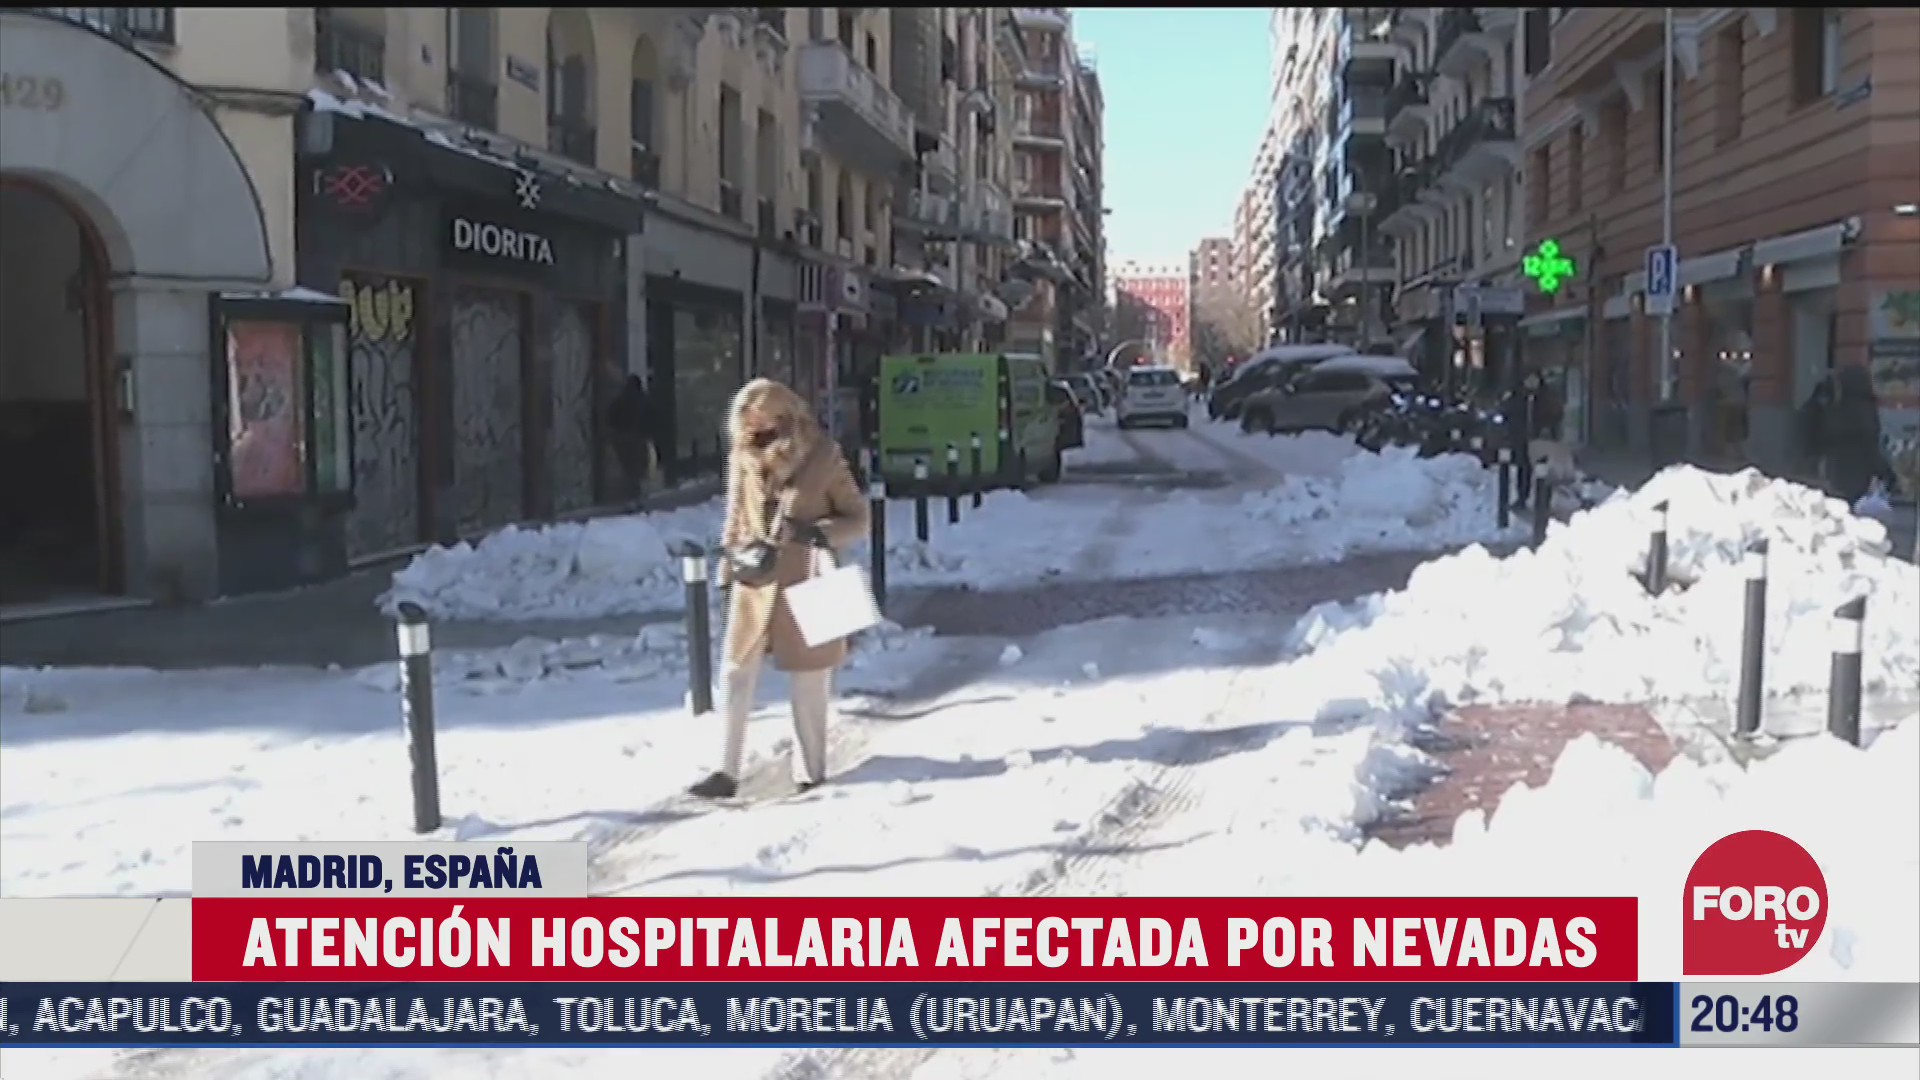 nevada en madrid espana afecta atencion hospitalaria